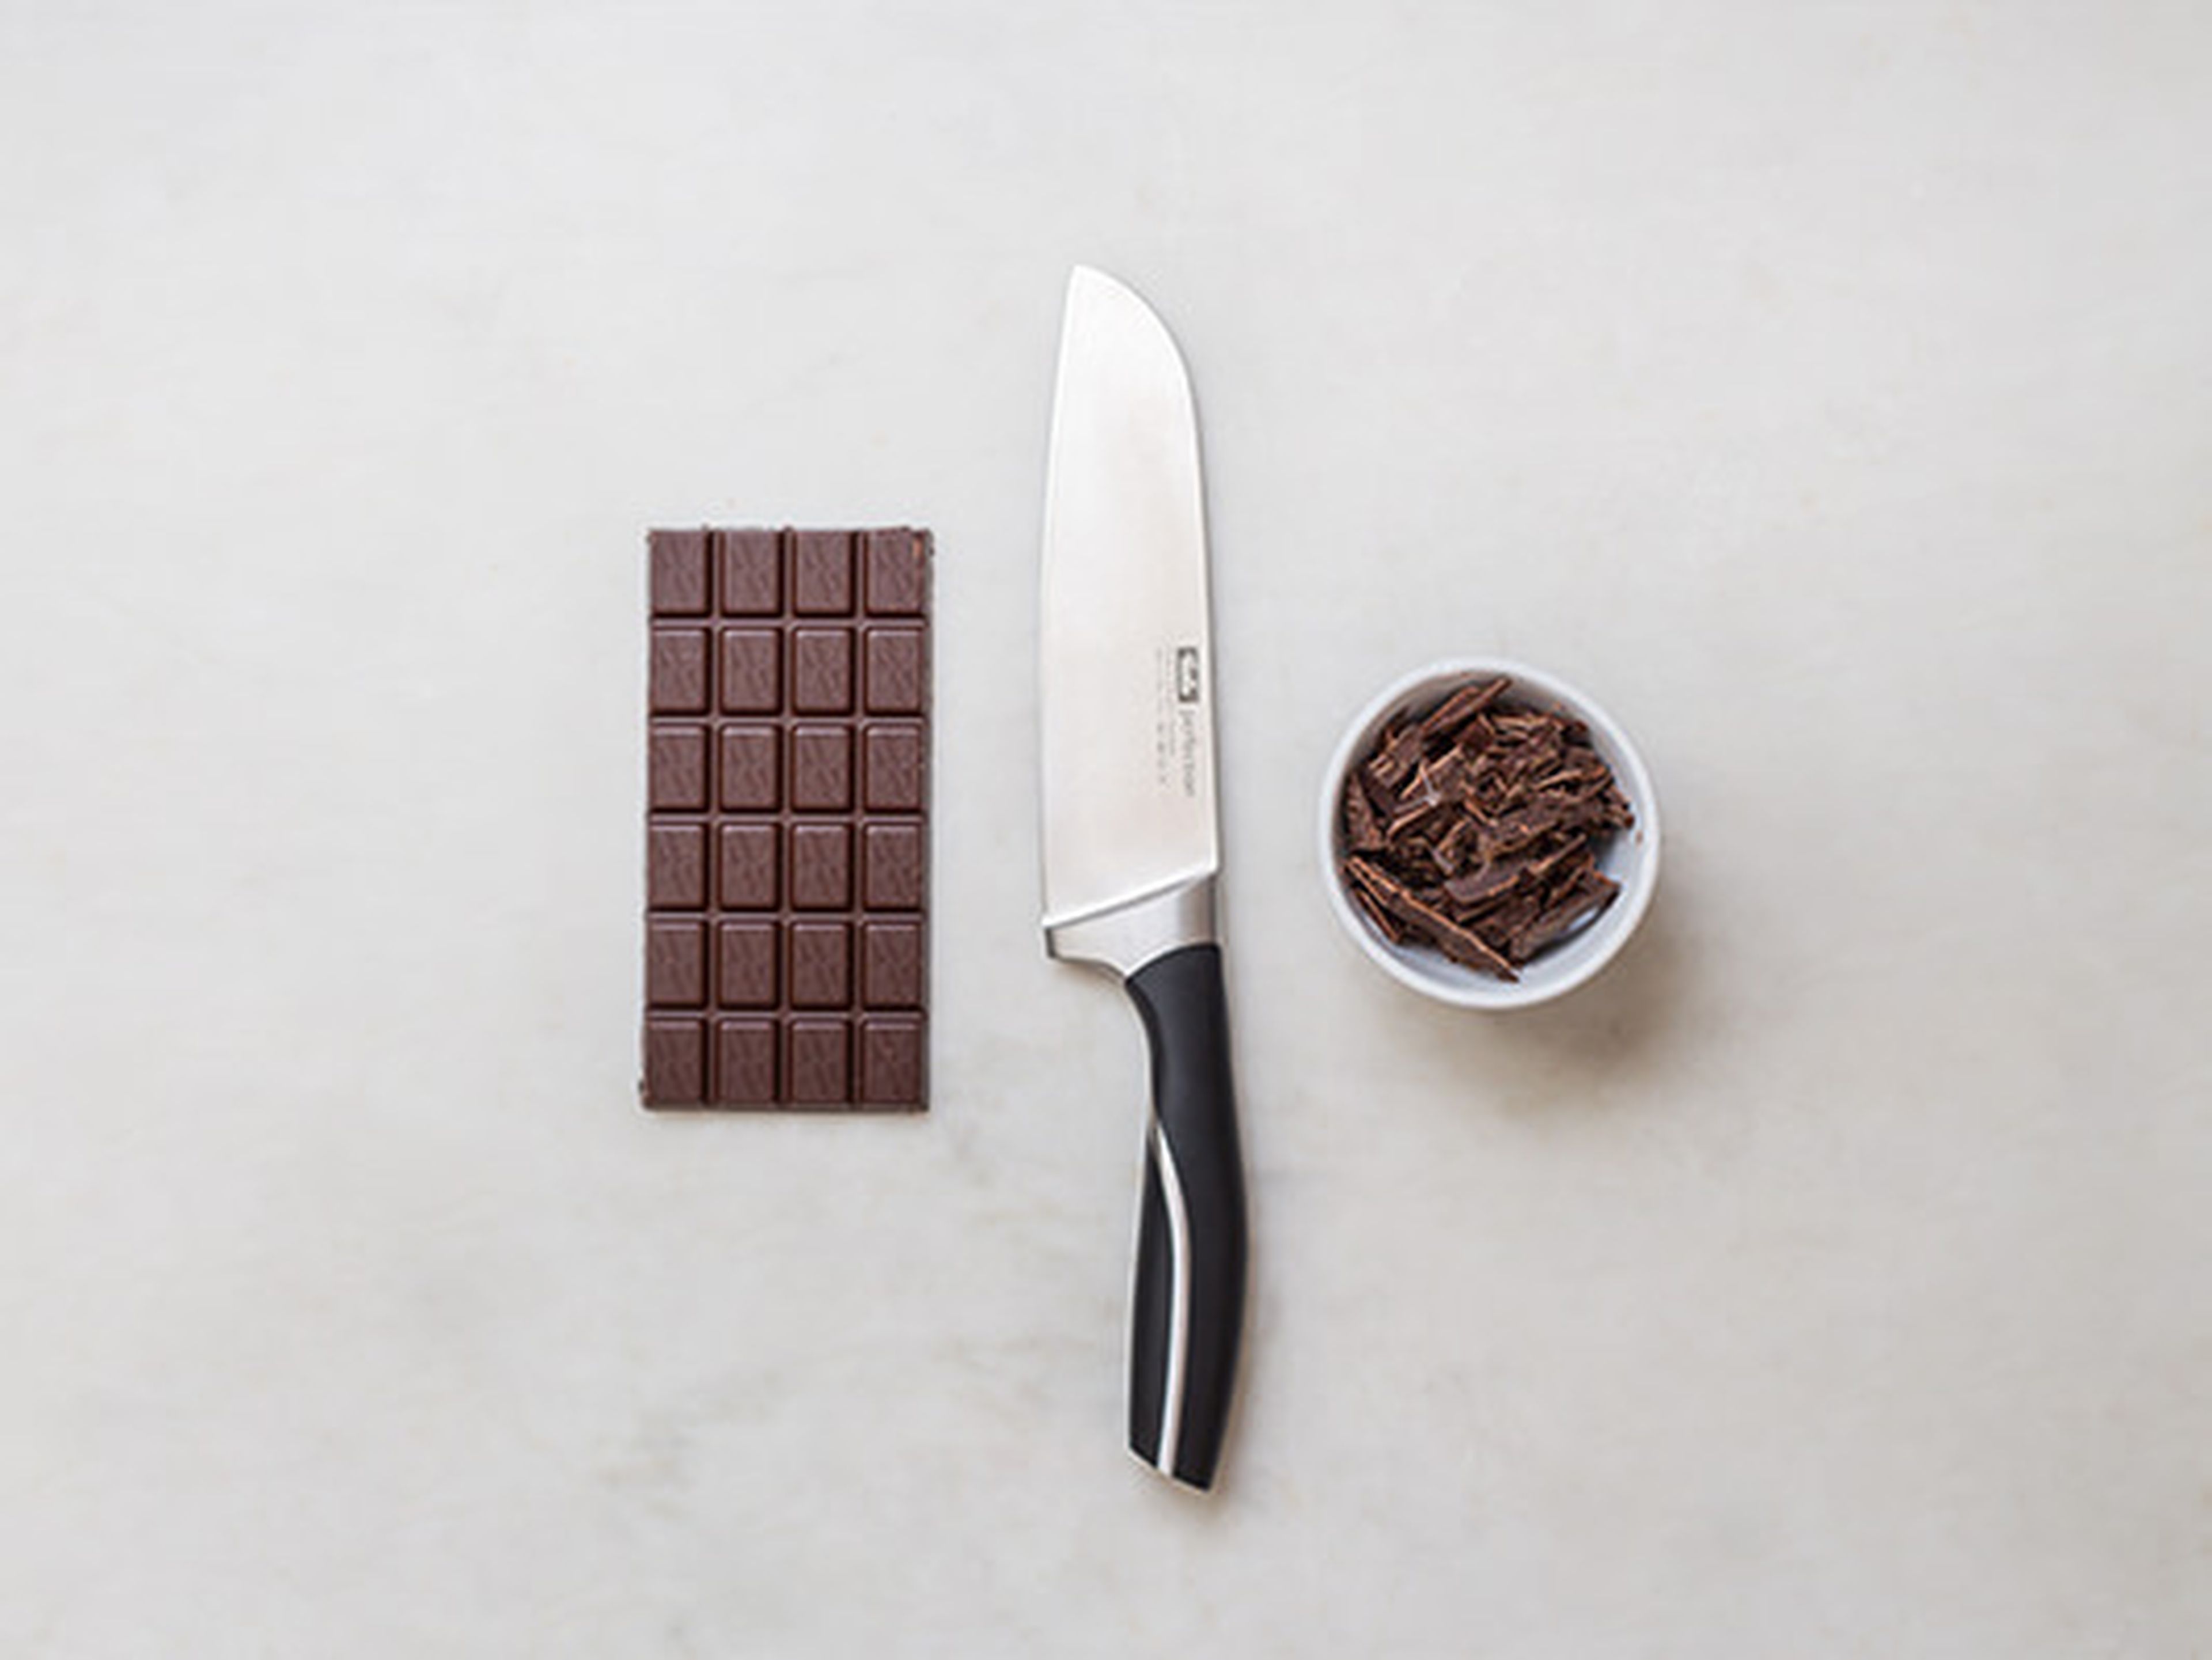 How to chop chocolate